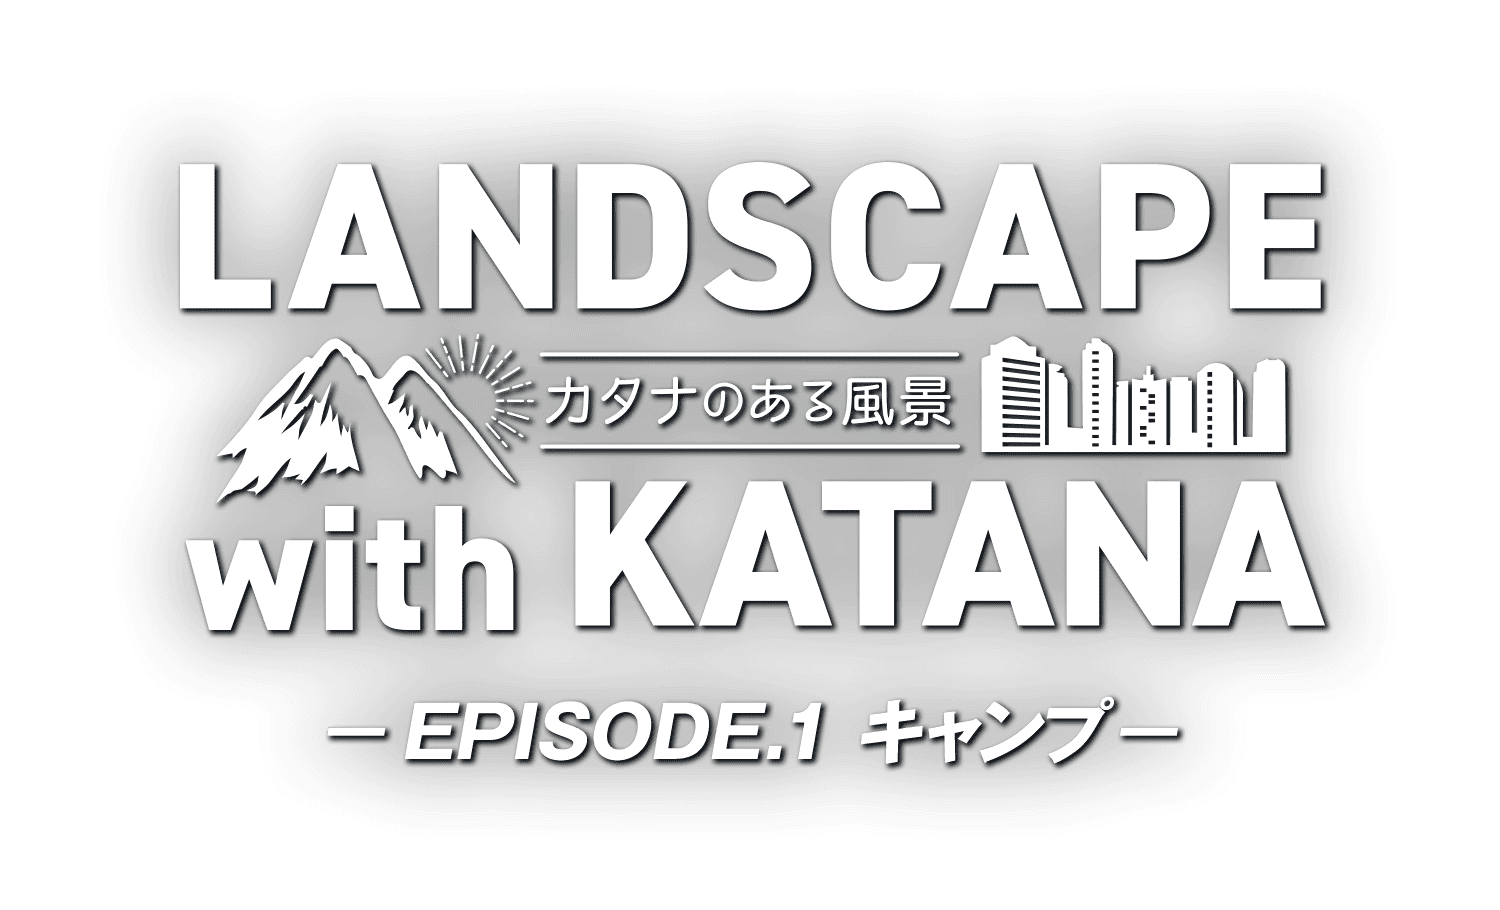 LANDSCAPE with KATANA 〜カタナのある風景〜 EPISODE.1 キャンプ